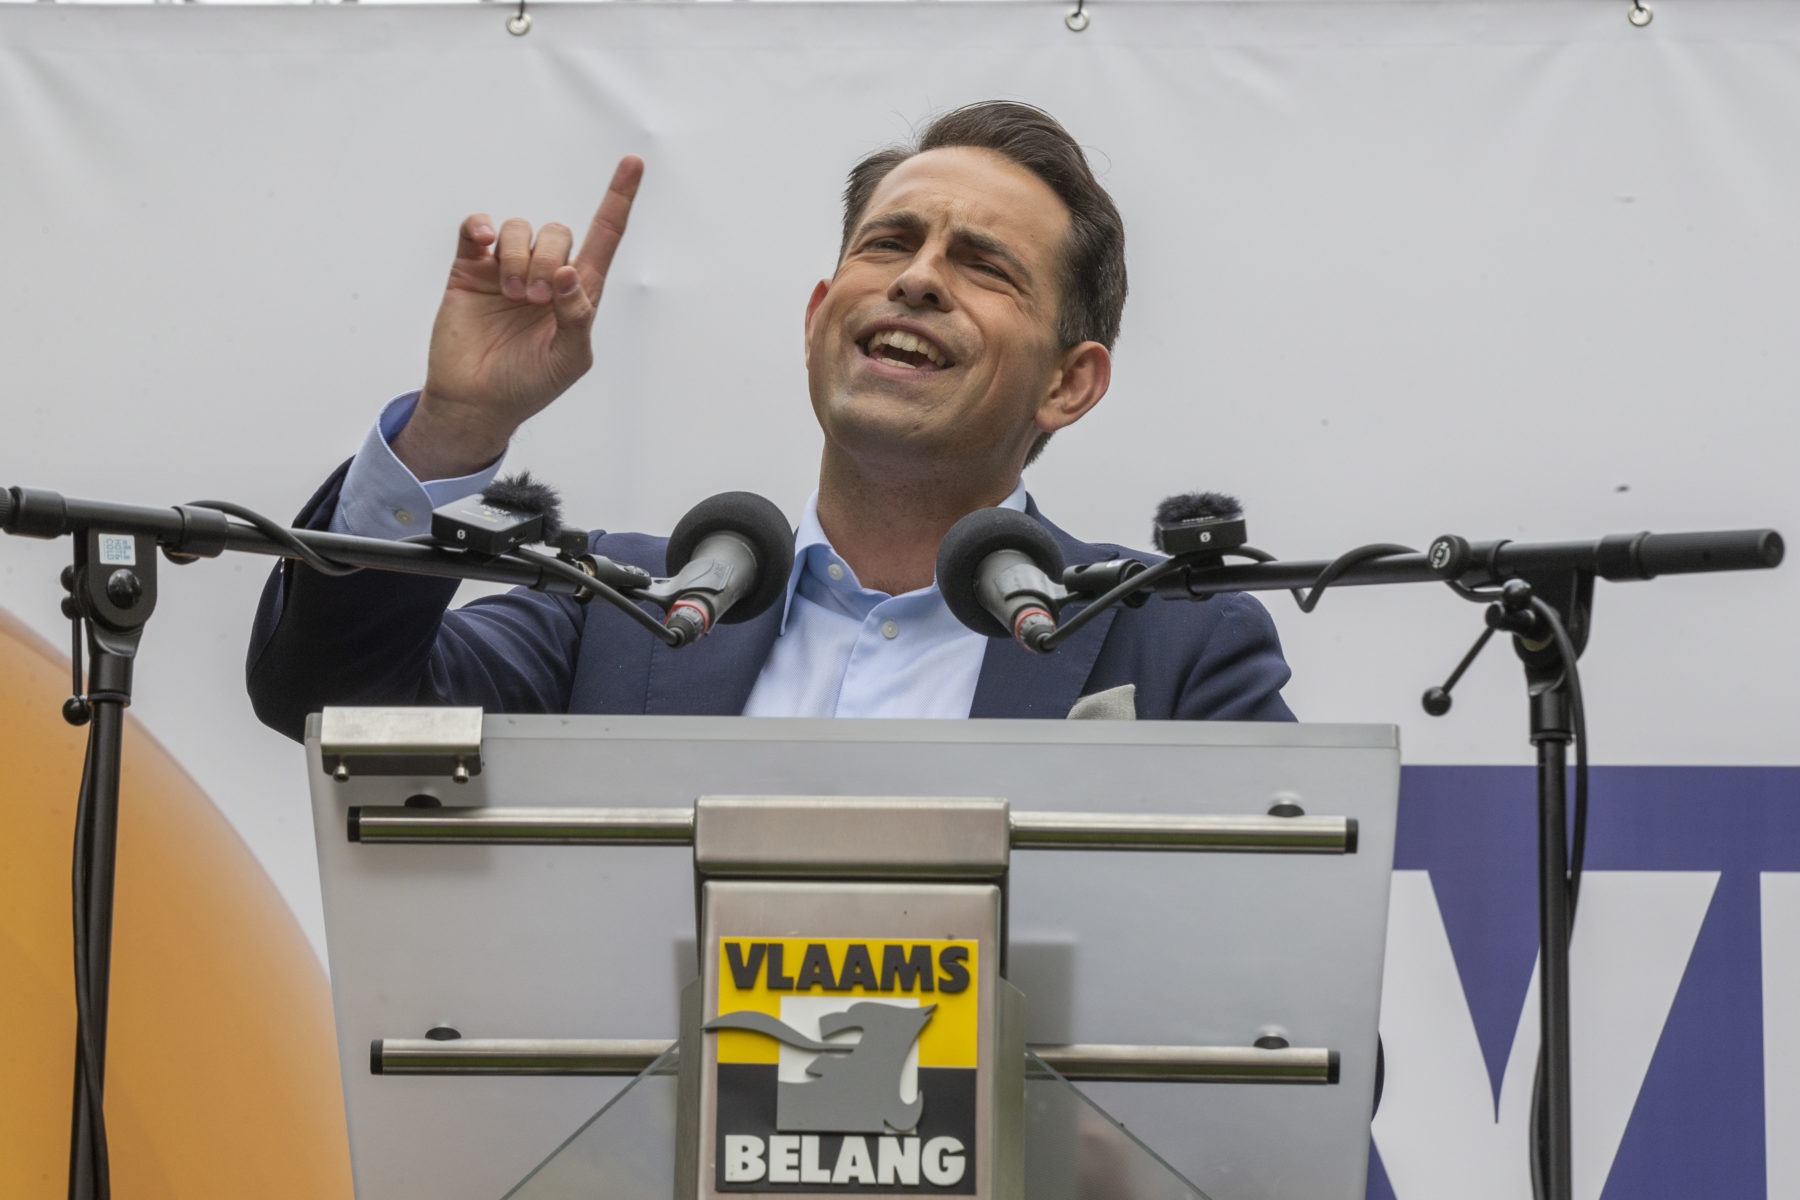 La percée du Vlaams Belang ne tombe pas du ciel